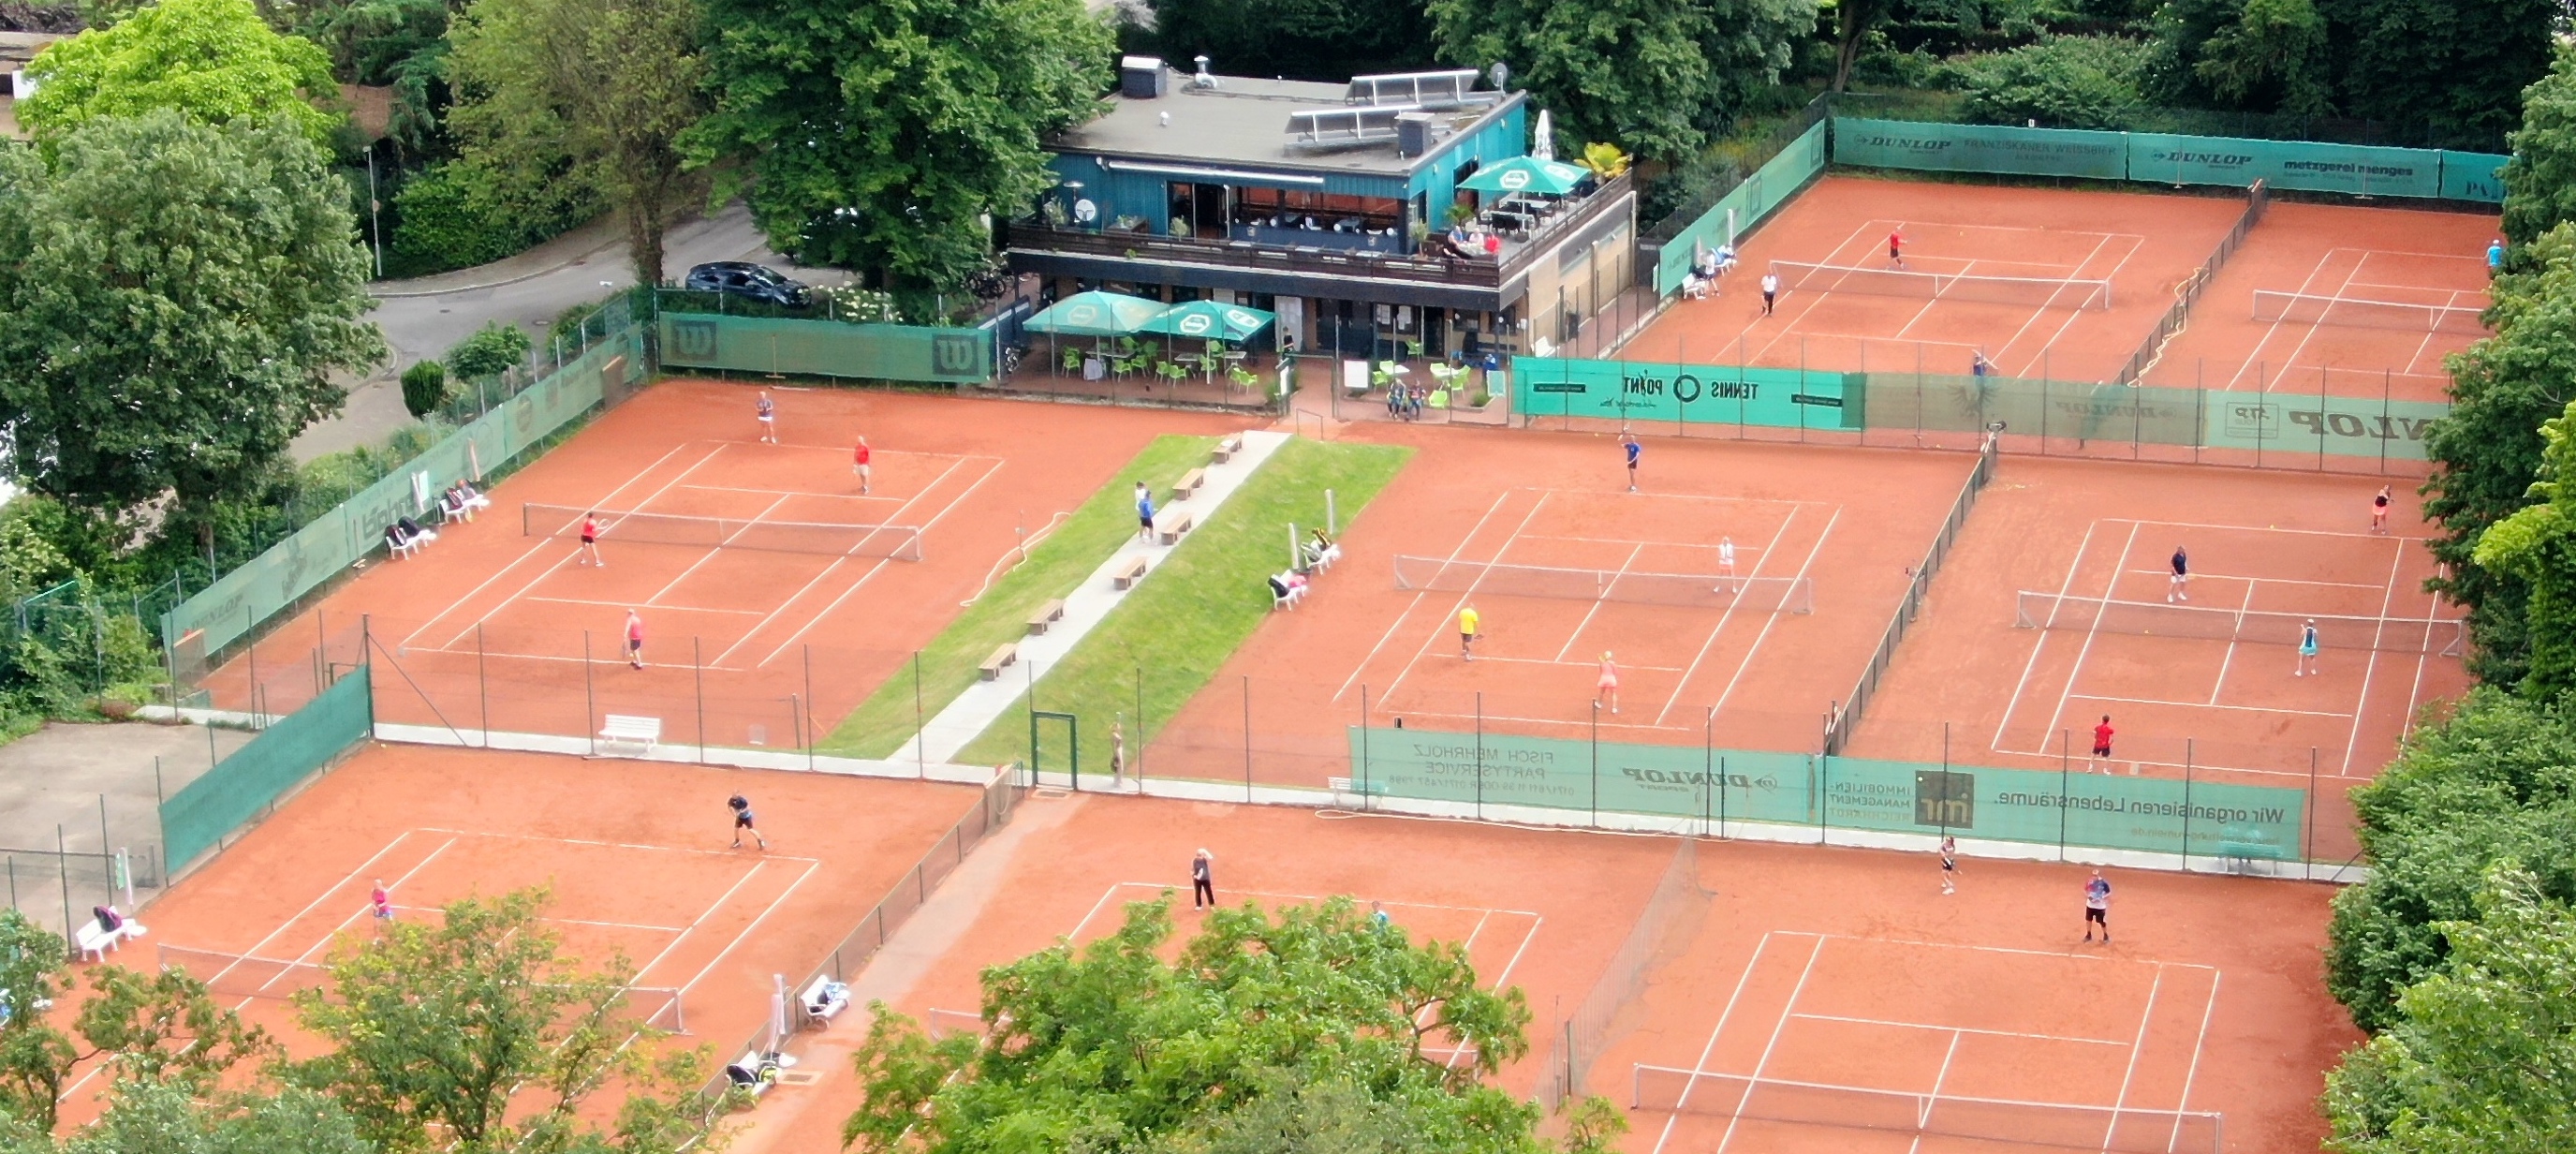 Tennisclub Rumeln-Kaldenhausen Start